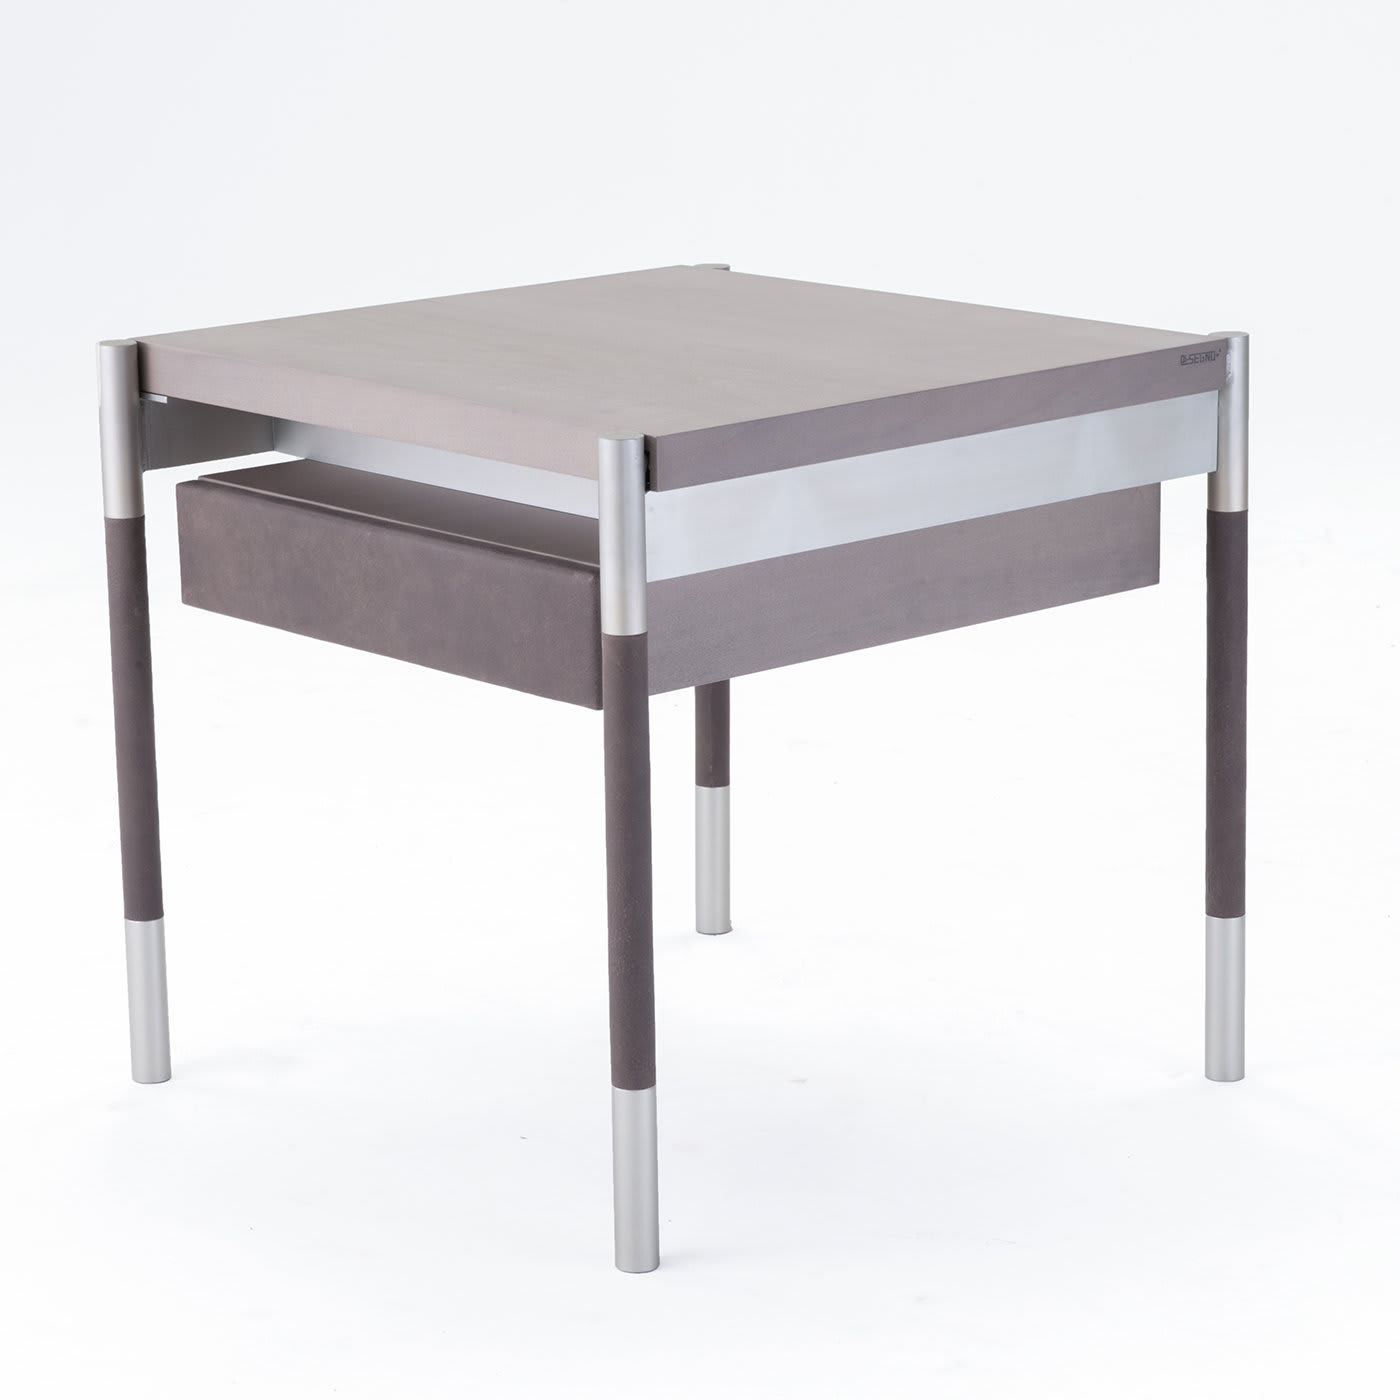 Soffio Maple-Wood Table by Michael Schoeller - Disegnopiù